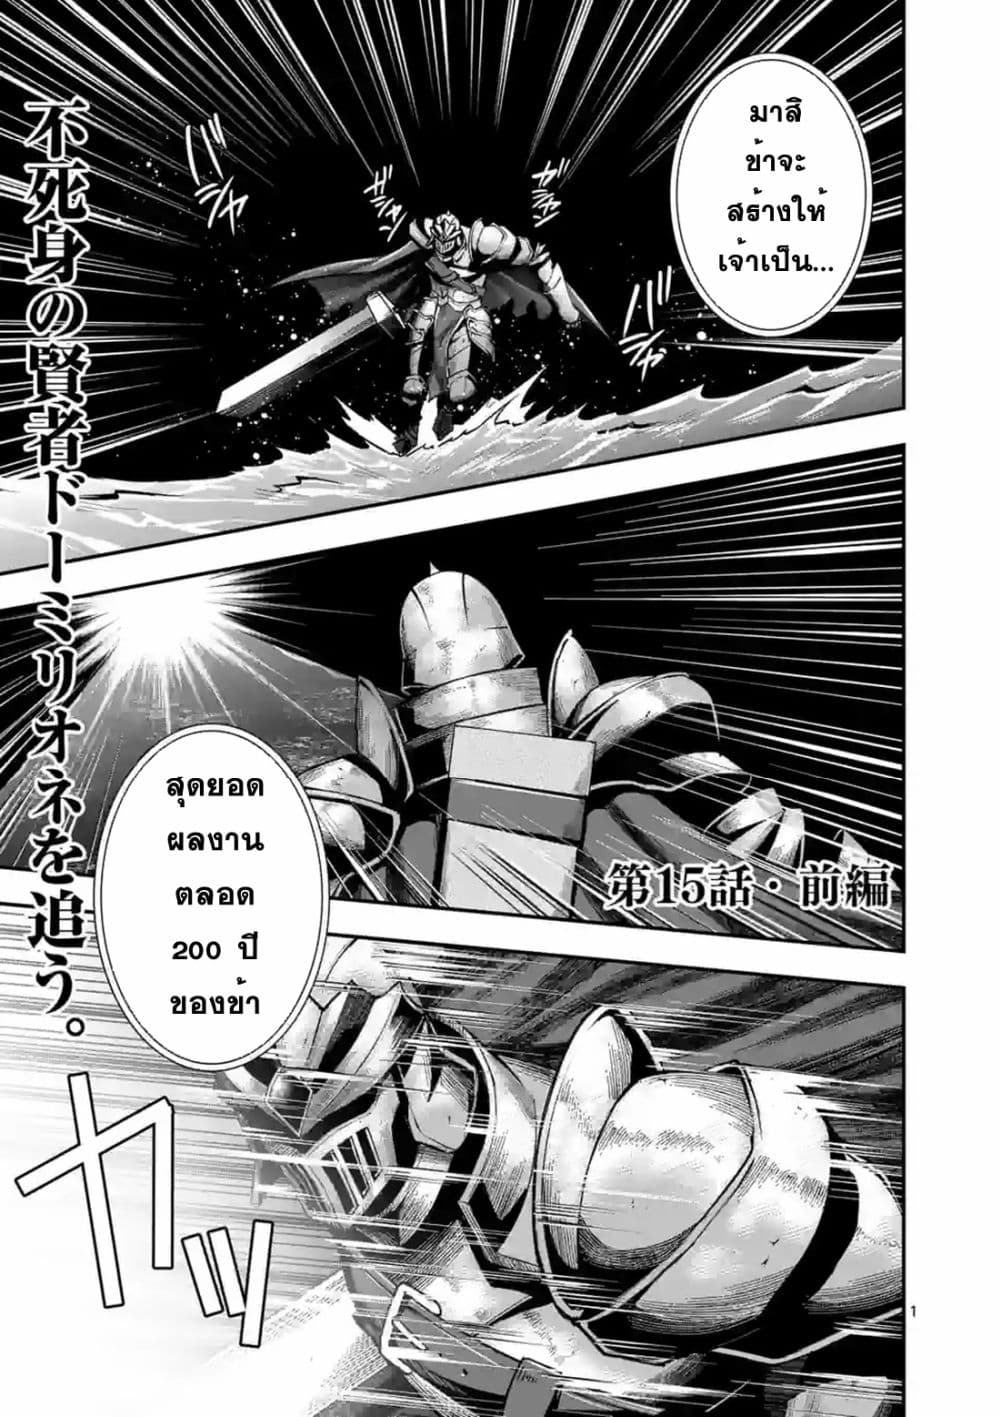 Moto Shogun no Undead Knight 15 (1)